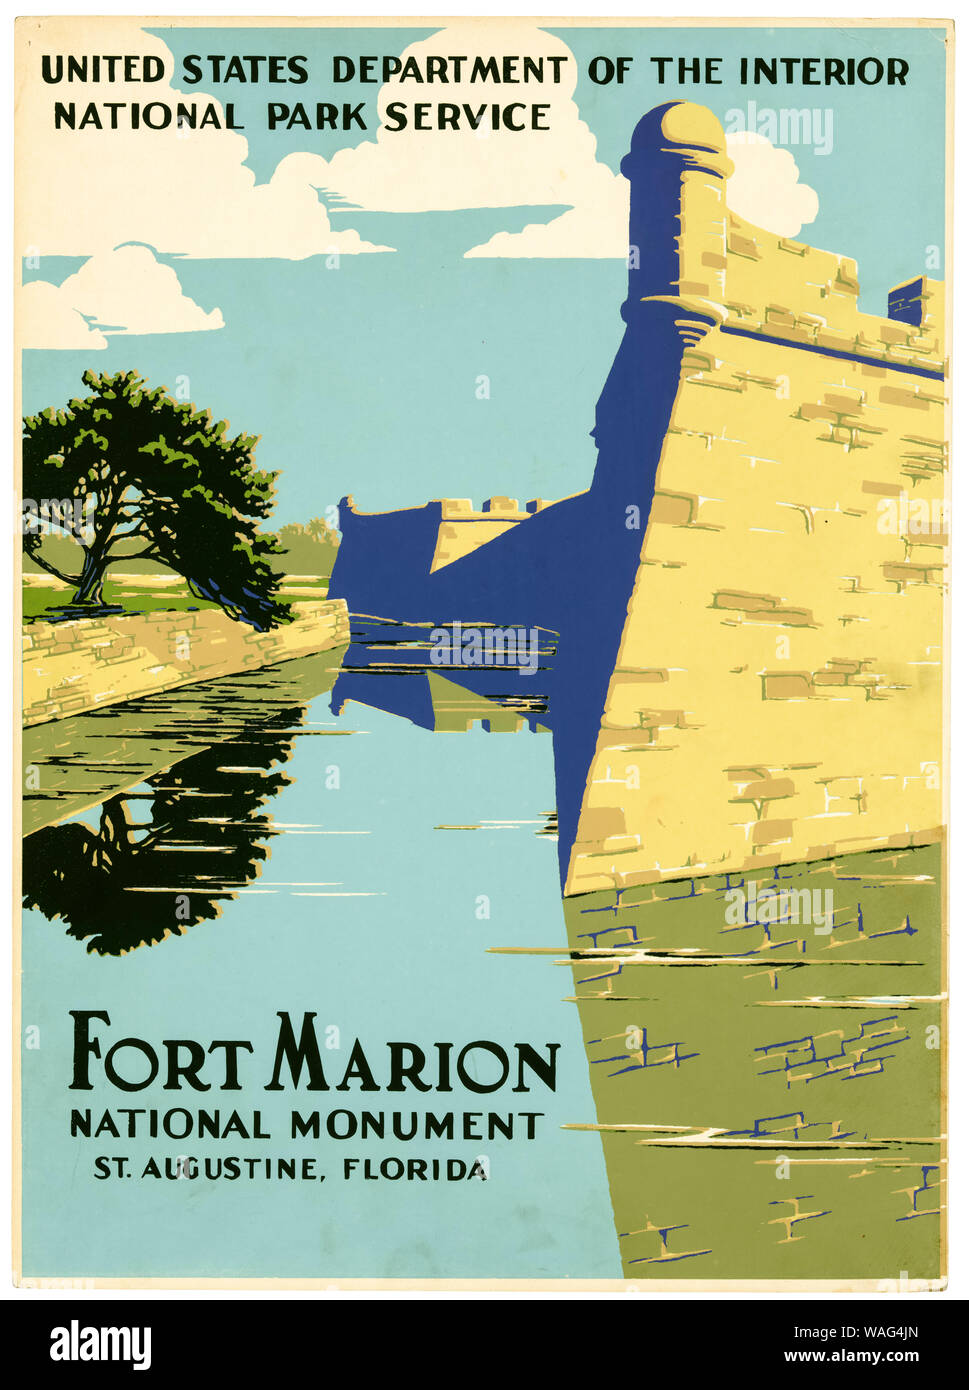 Vintage travel poster, Fort Marion, Monument National, Saint Augustine, Floride, affiche, vers 1938, 1930 Banque D'Images